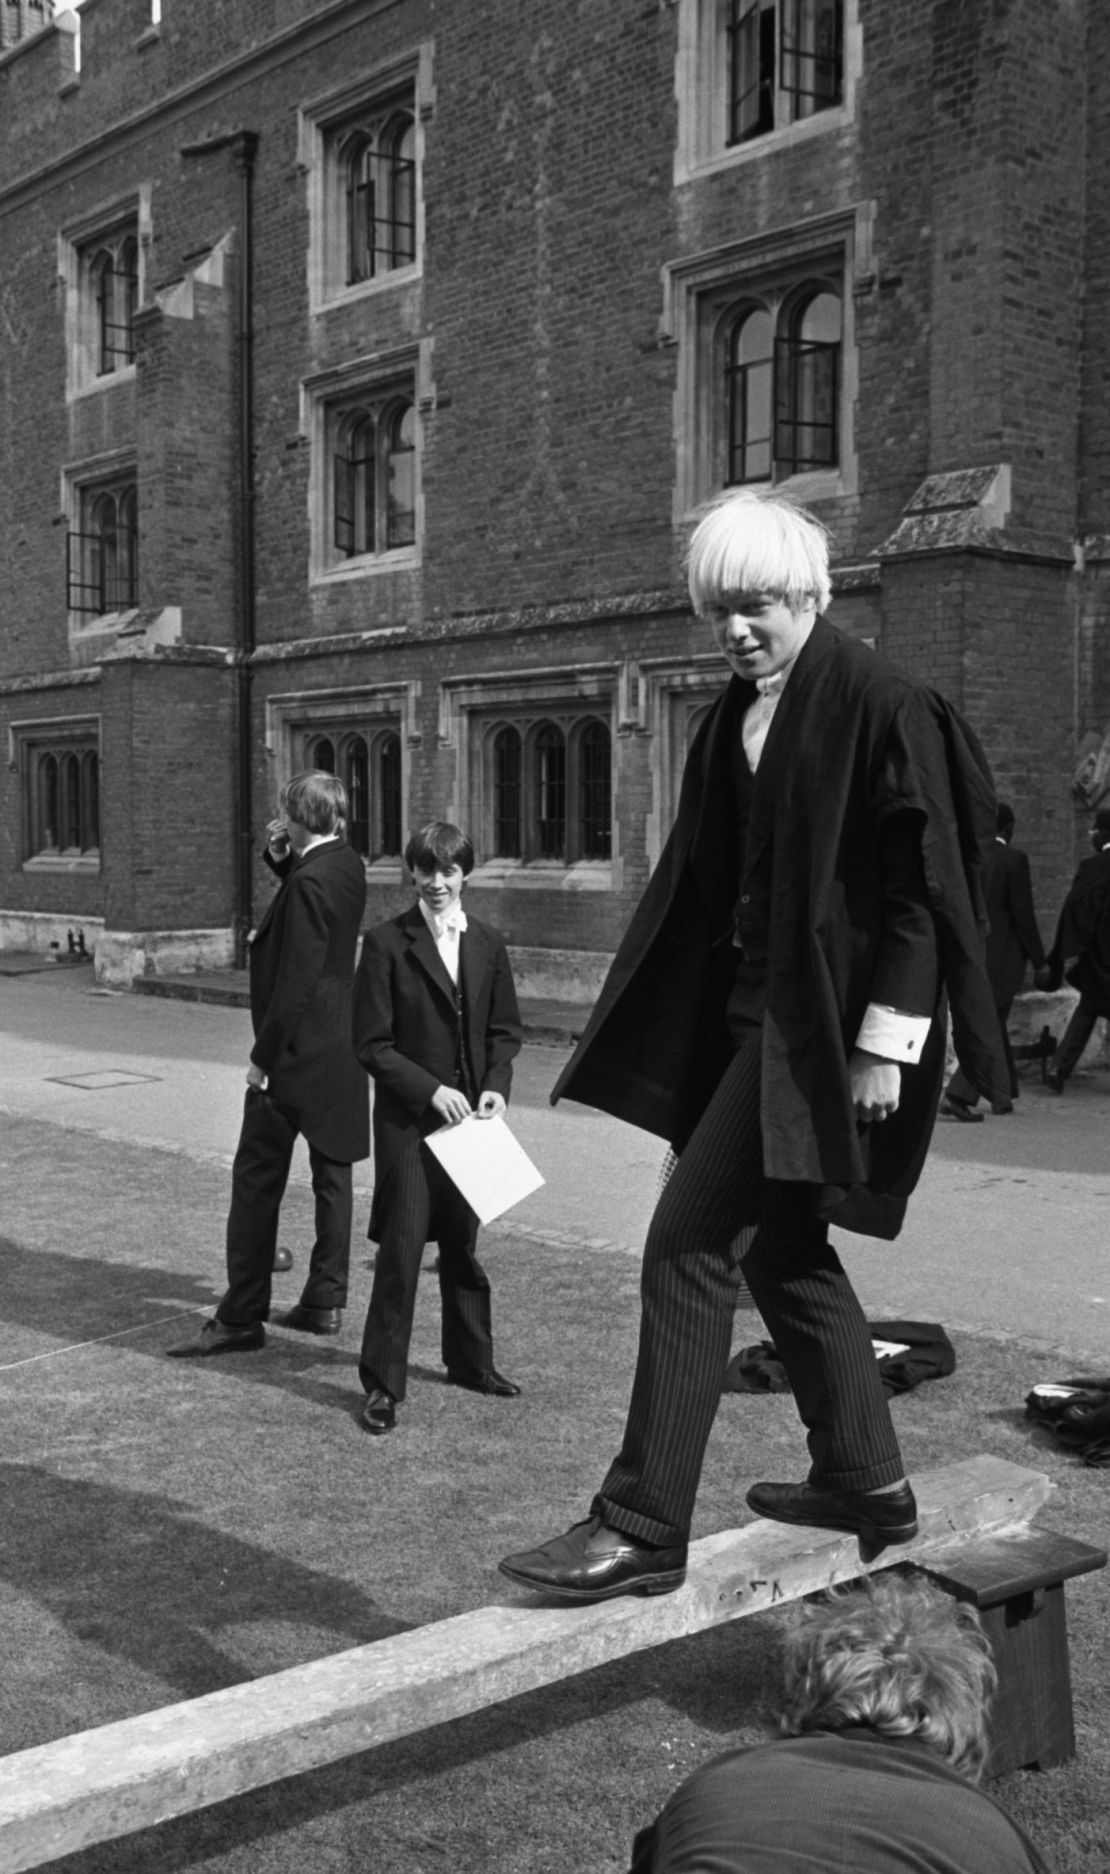 Boris Johnson at Eton School, September 1979.
